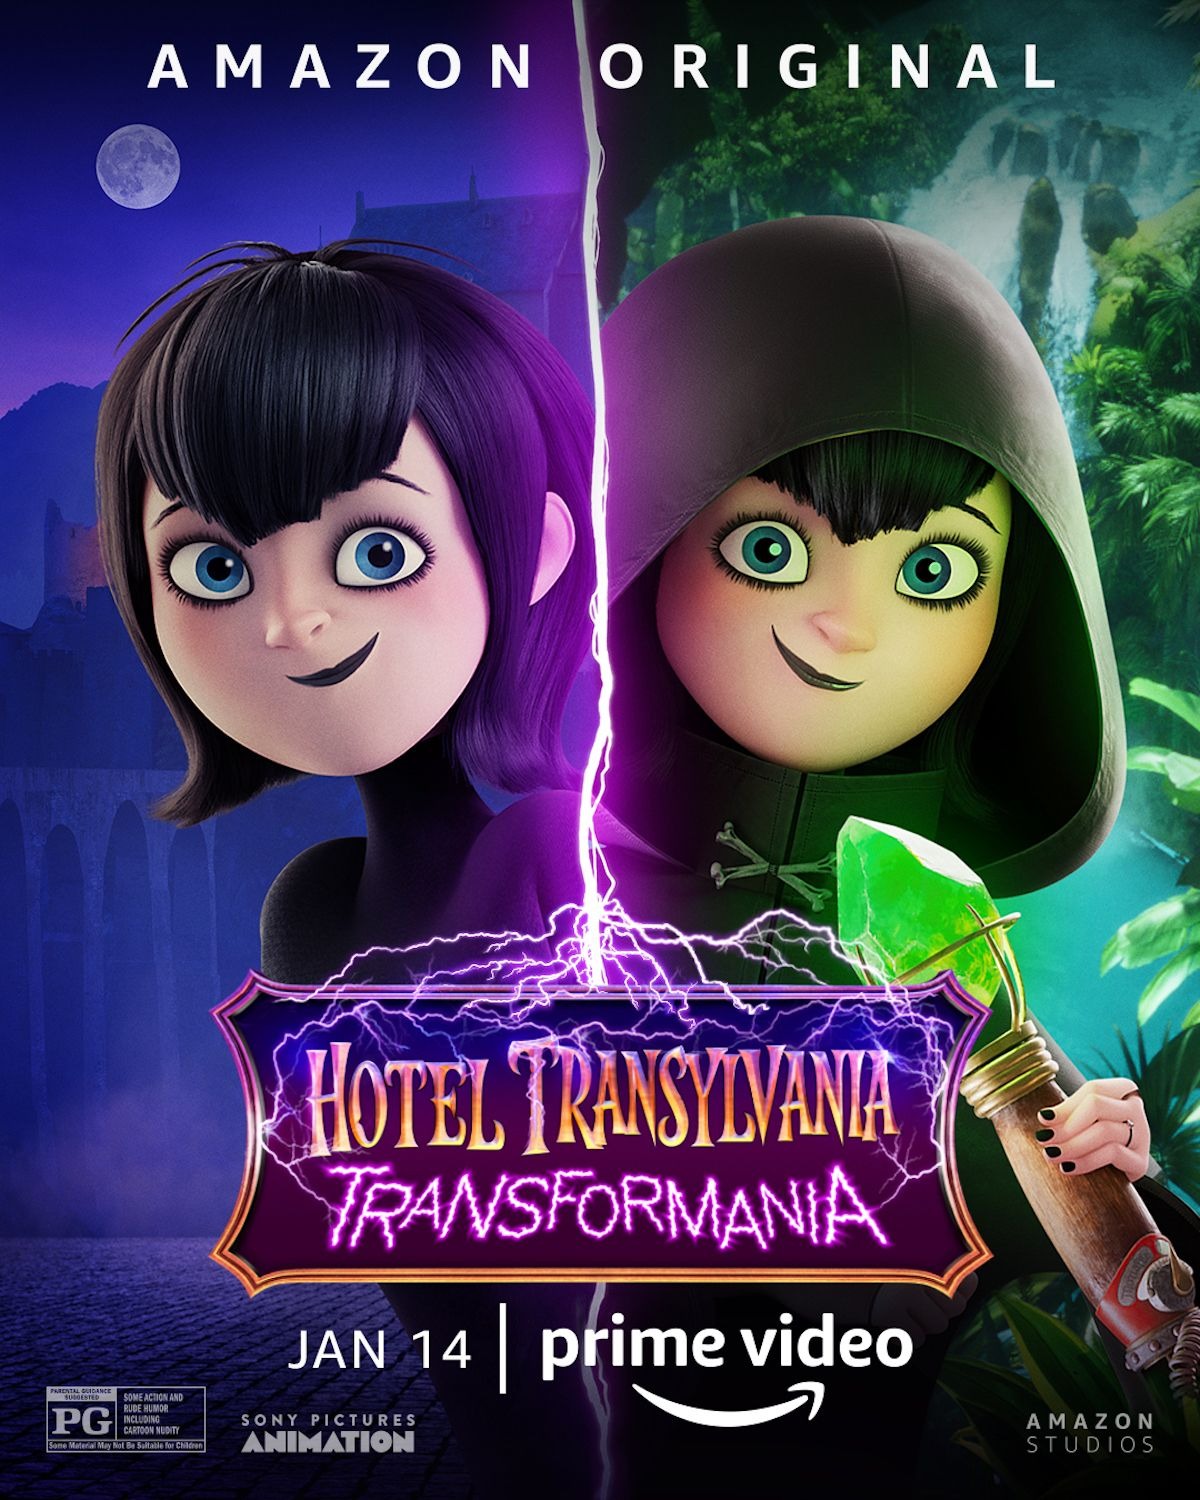 Extra Large Movie Poster Image for Hotel Transylvania: Transformania (#8 of 22)